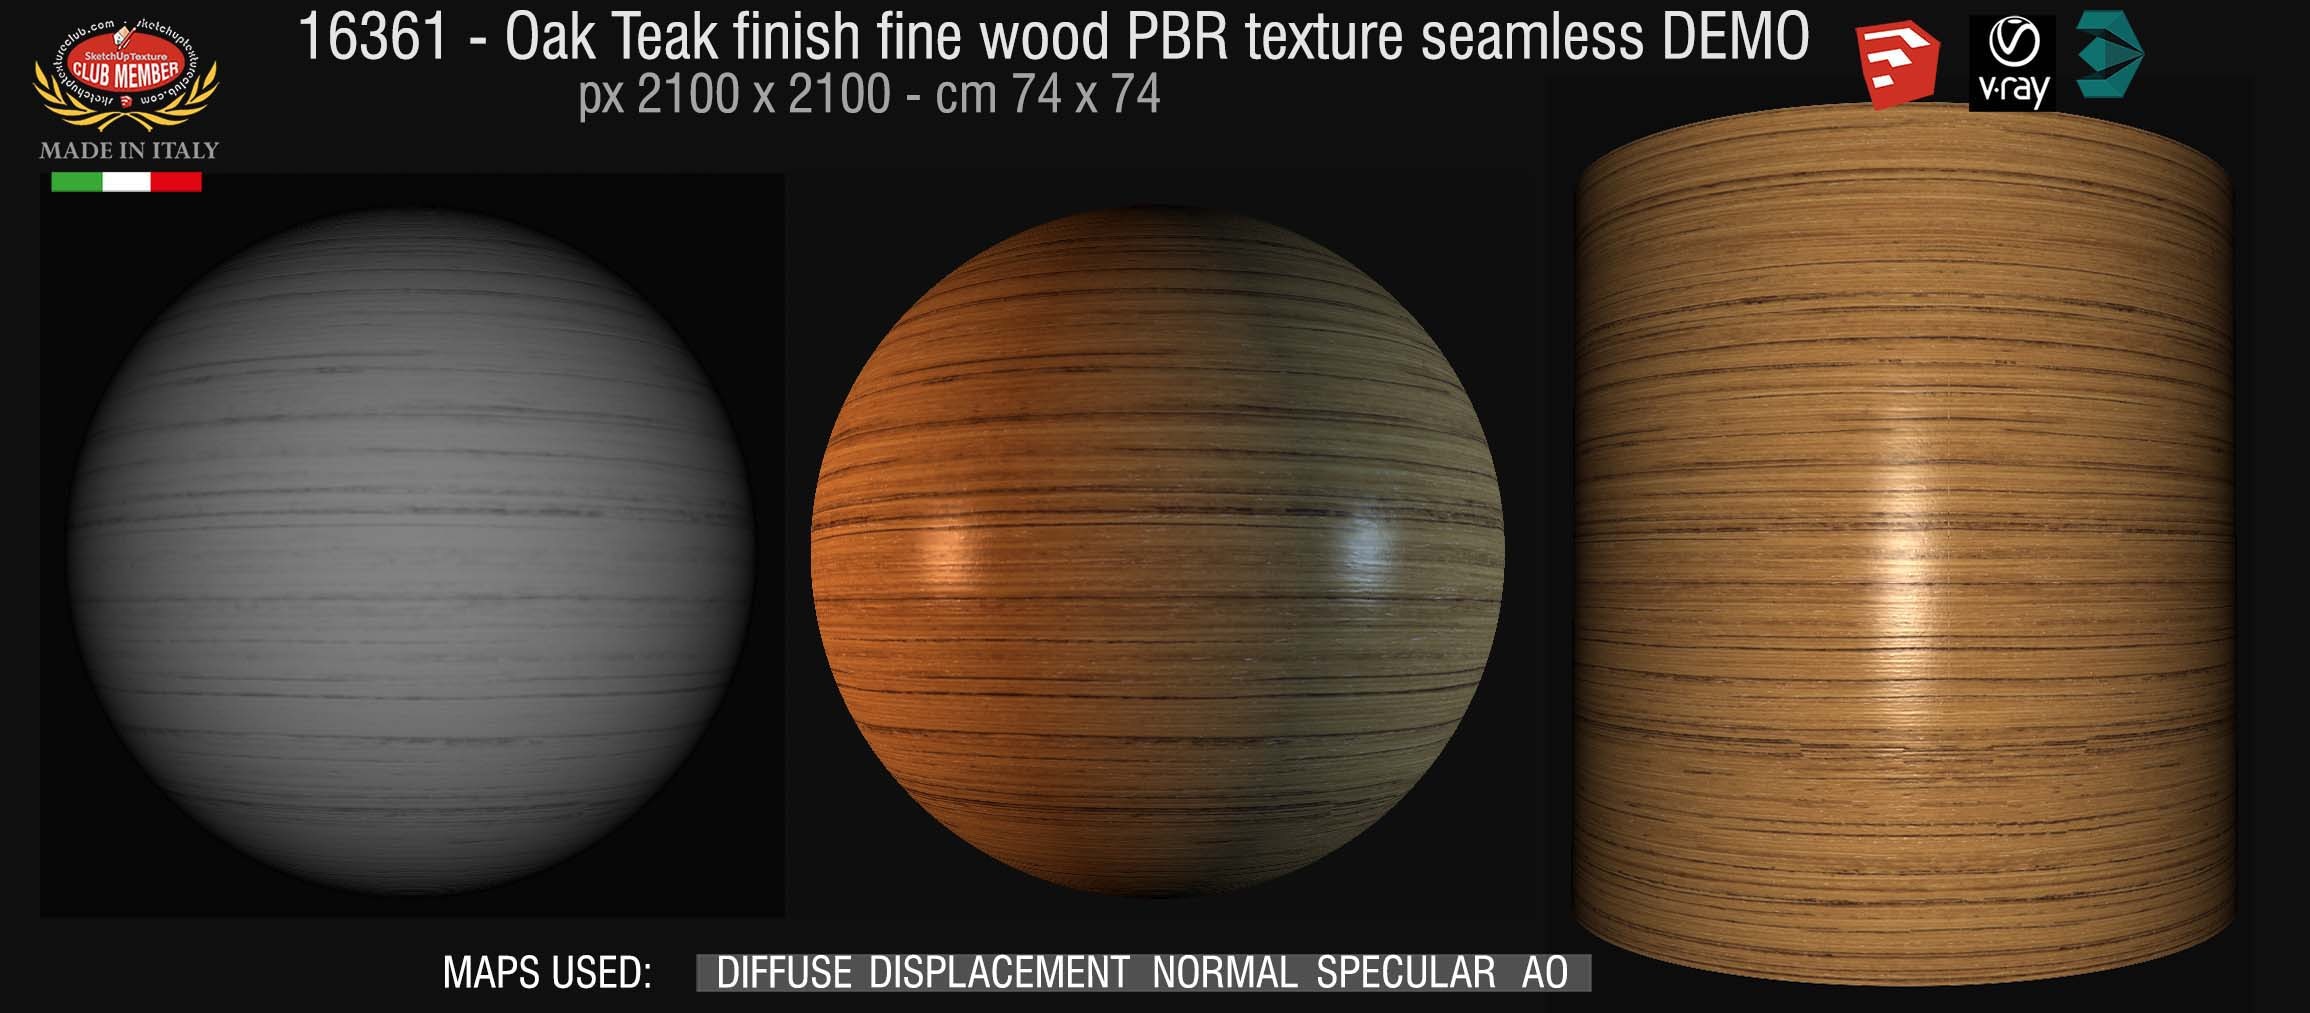 16361 Oak teak finish fine wood PBR texture seamless DEMO